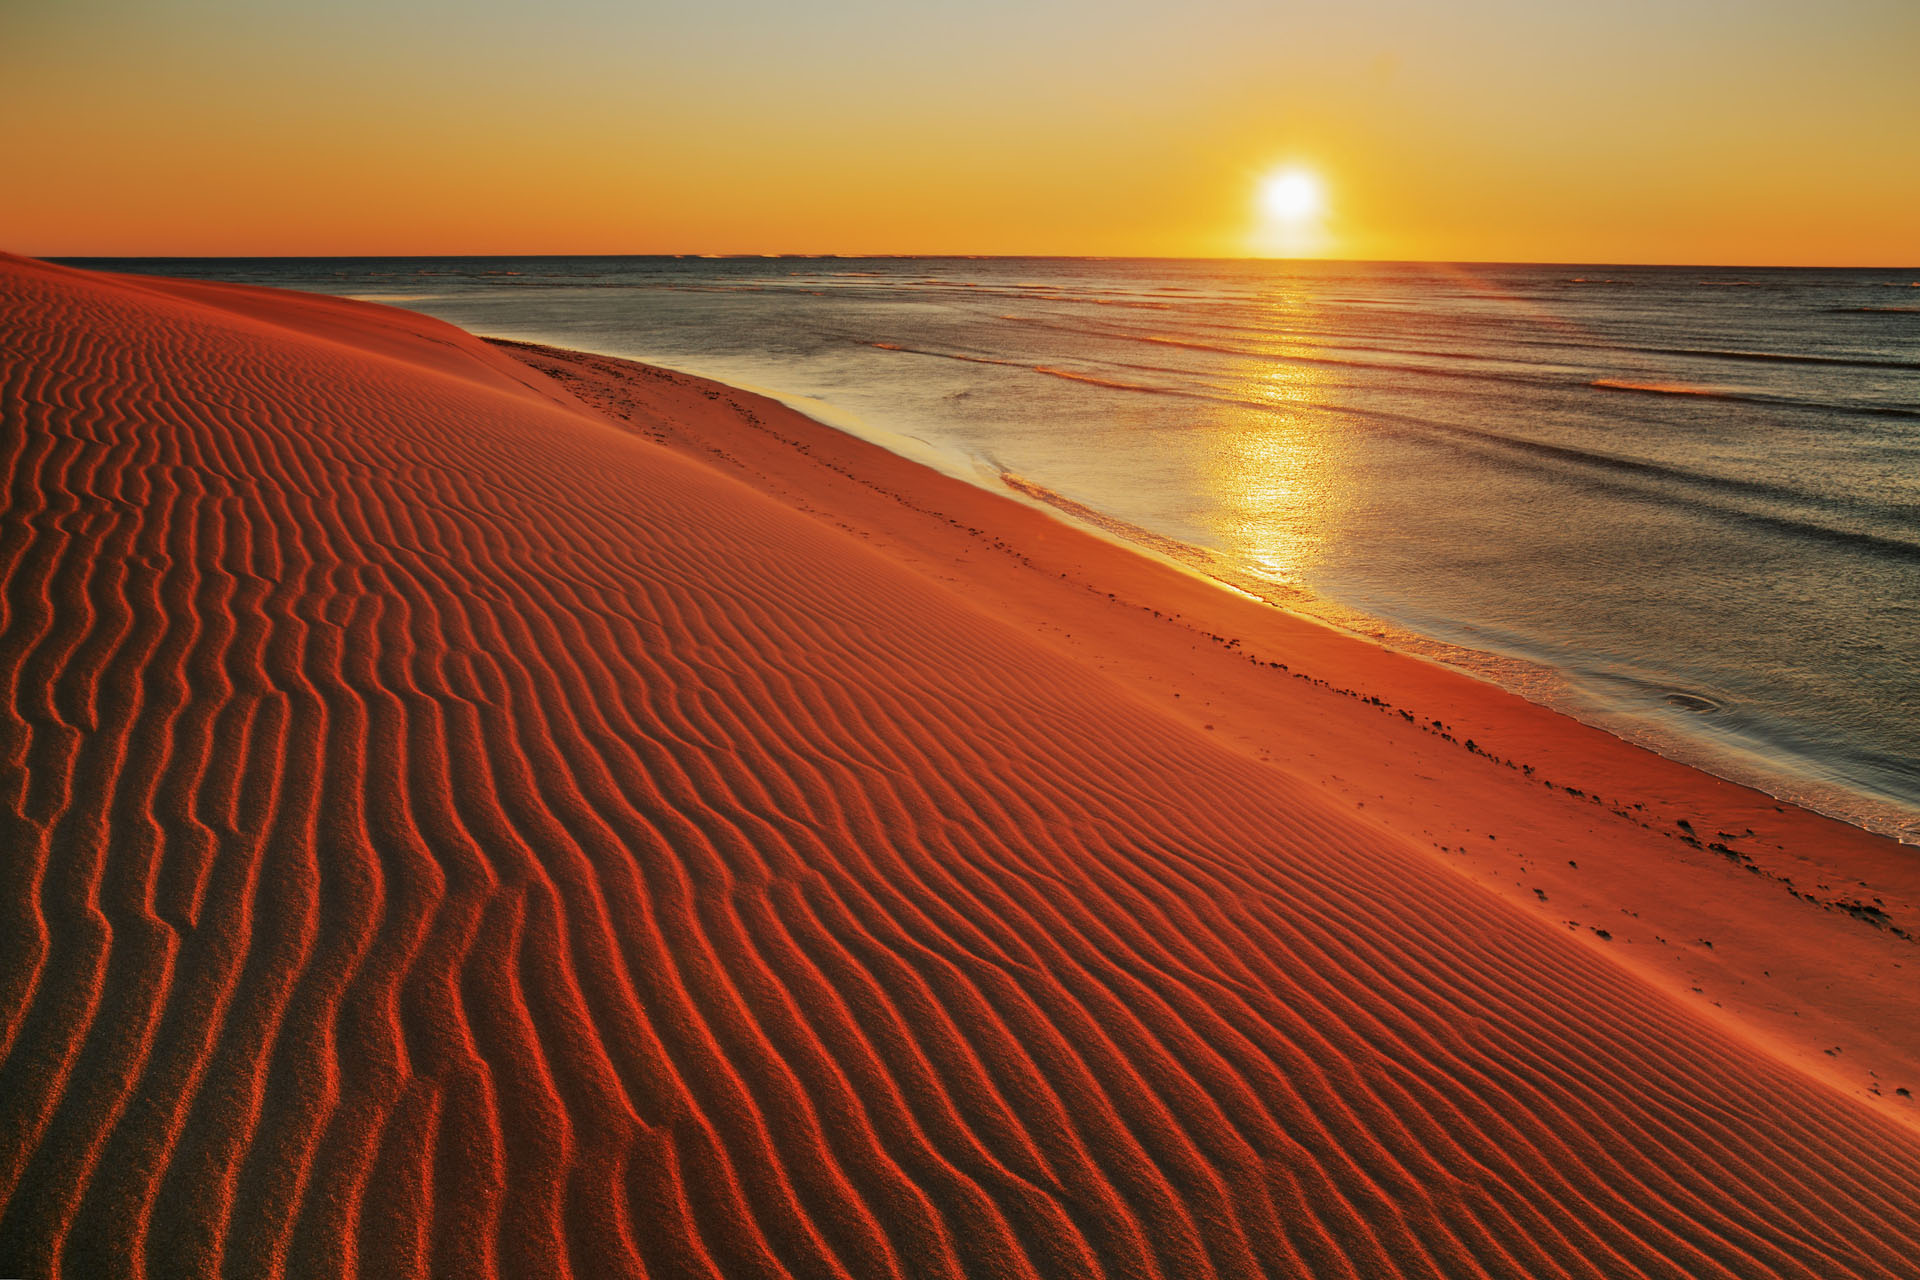 Dune landscape and ocean